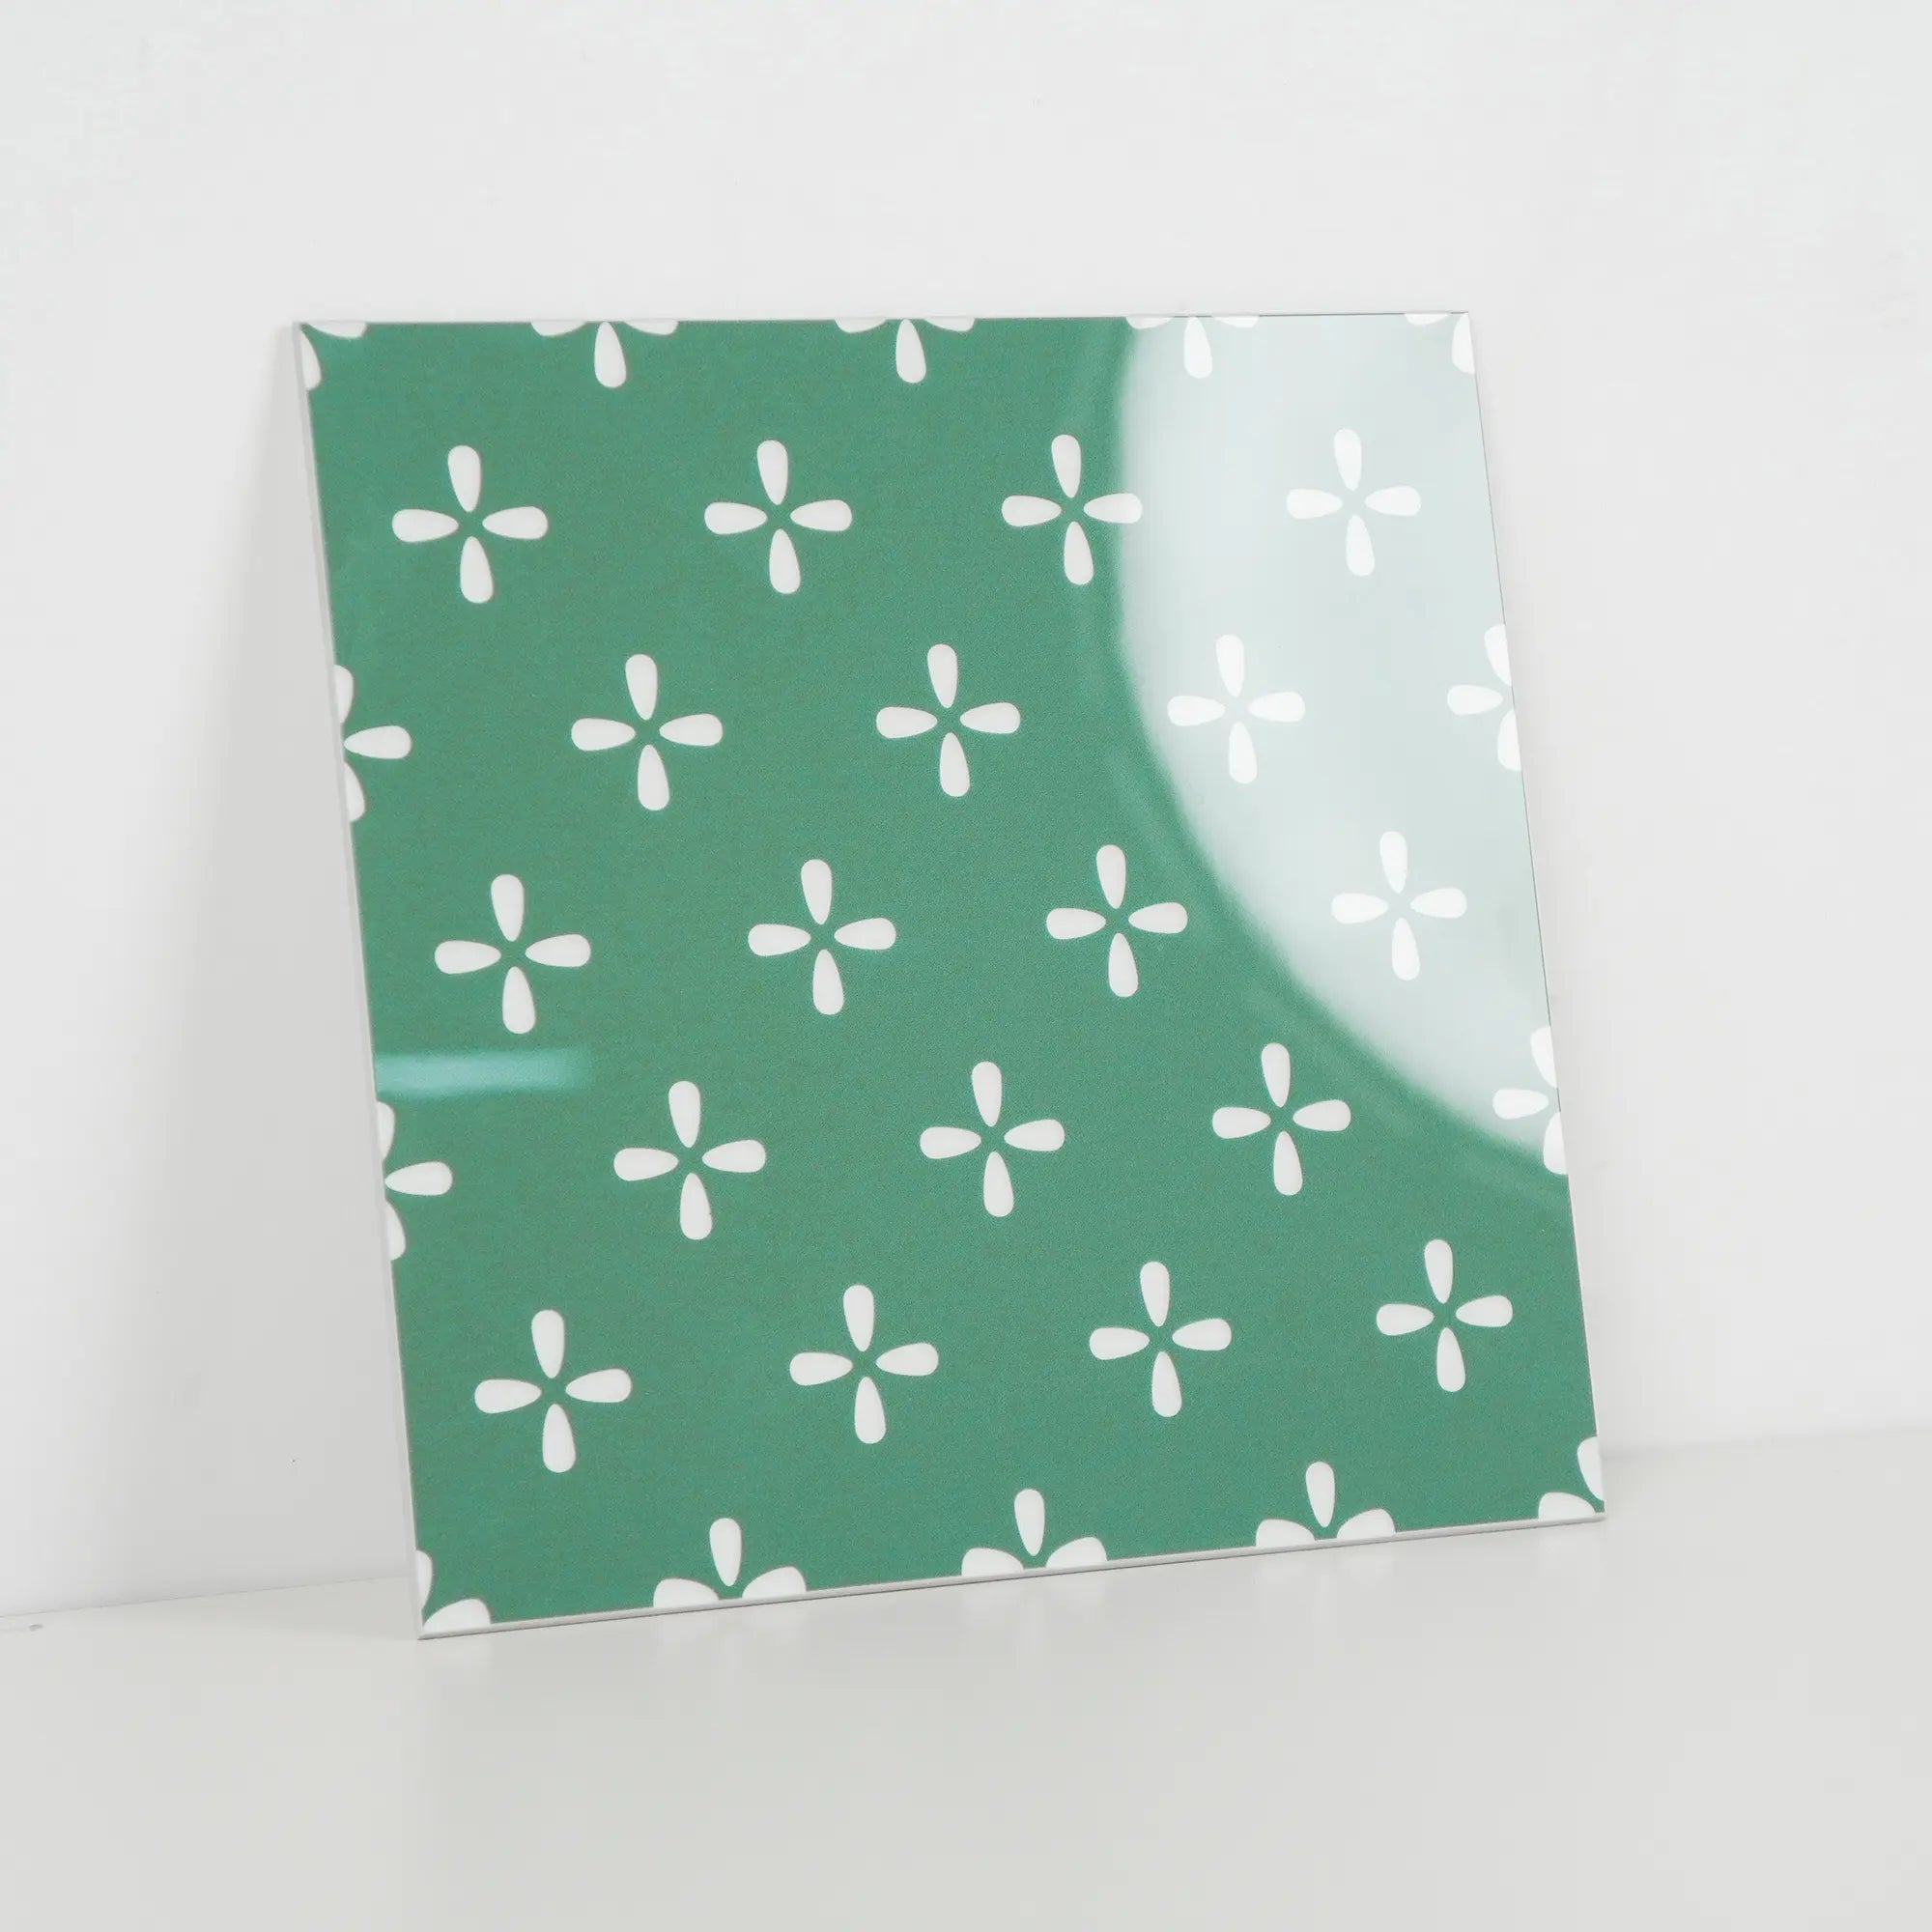 COLAMO Glossy Green Dot Print Patterned Self Adhesive Graphic Tile Peel and Stick Backsplash